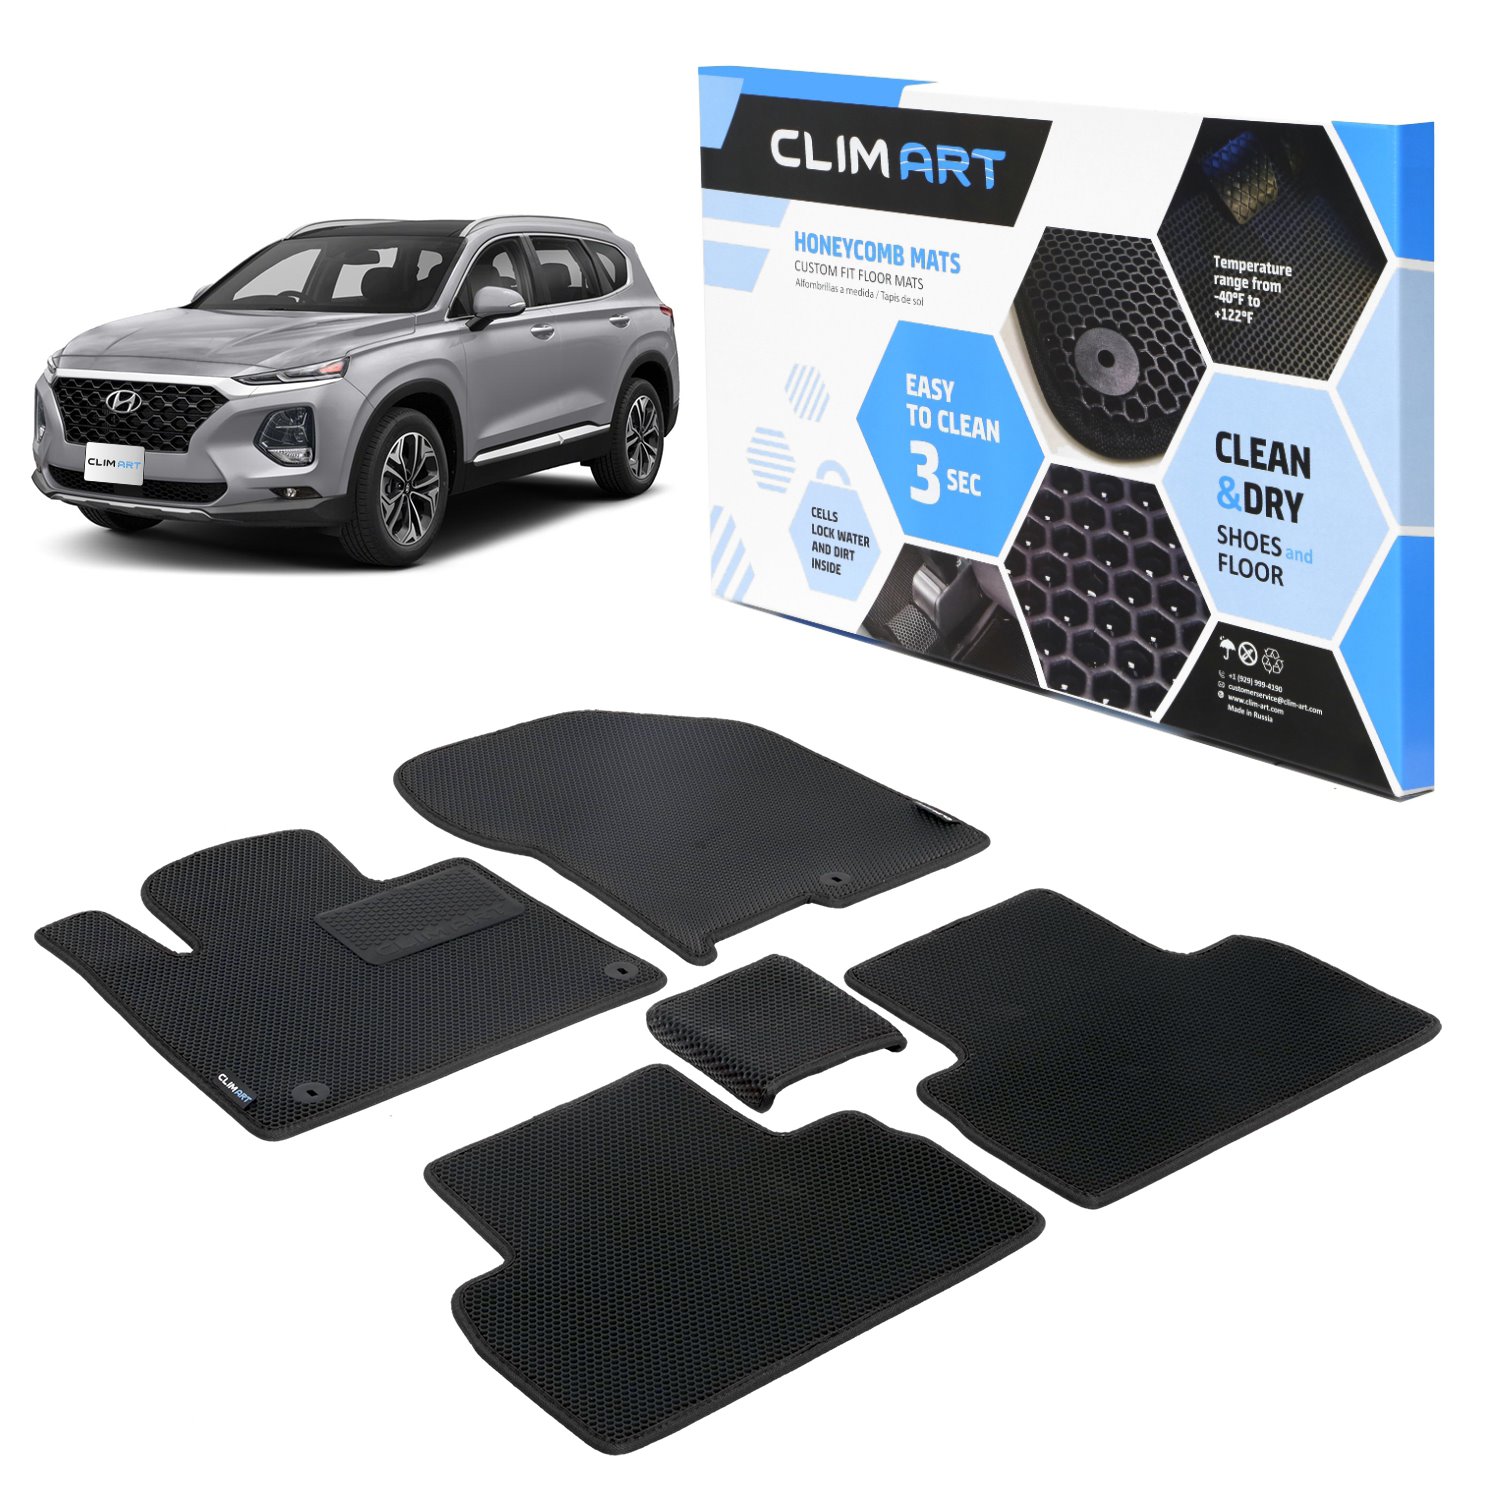 CLIM ART Honeycomb Custom Fit Floor Mats for 2019-2020 Hyundai Santa Fe